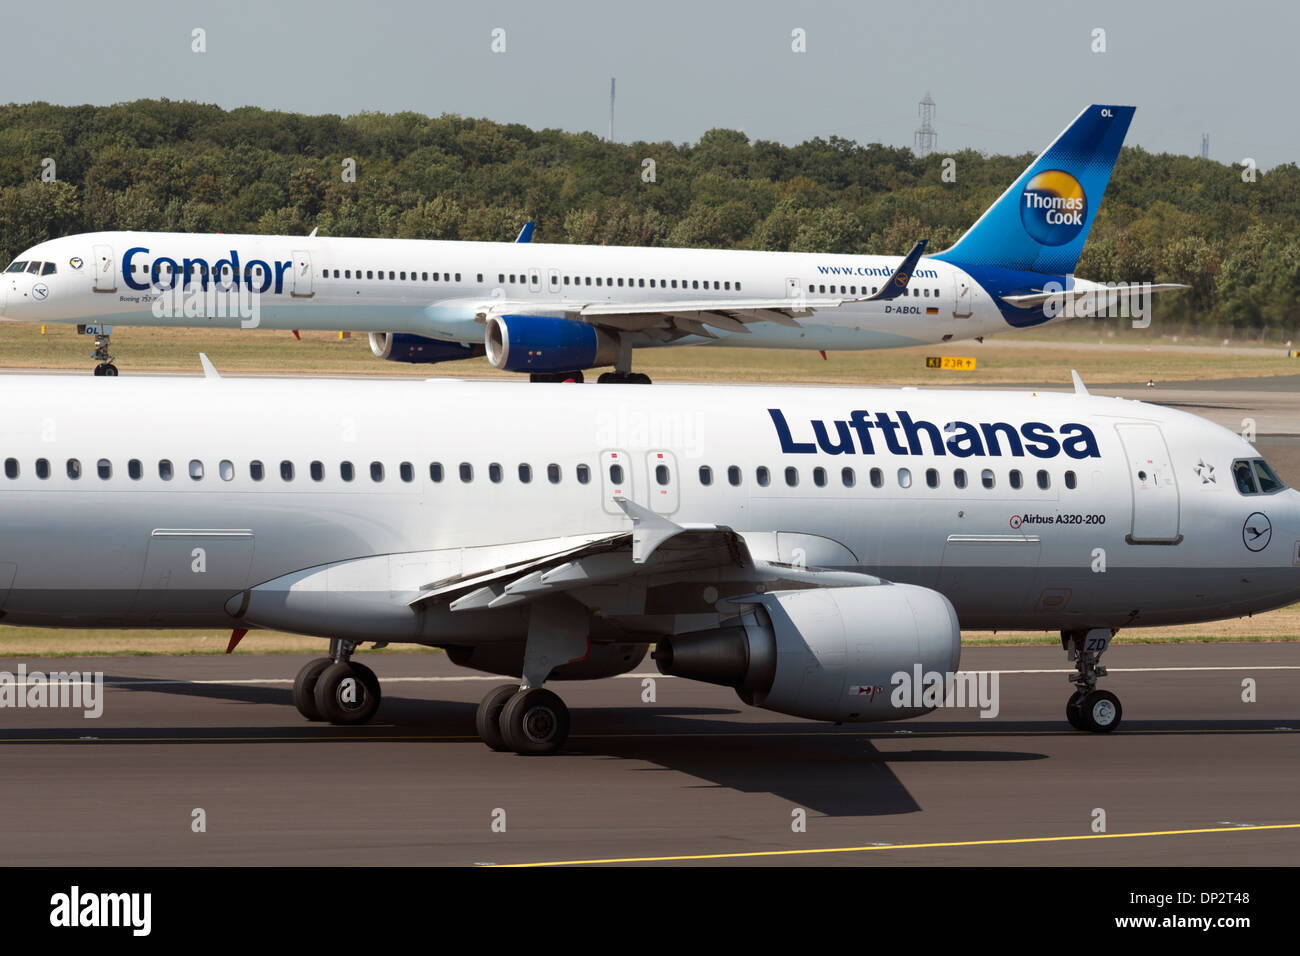 Lufthansa Airbus A320-200 and Condor Airways Boeing 757-300, Dusseldorf International airport, Germany. Stock Photo